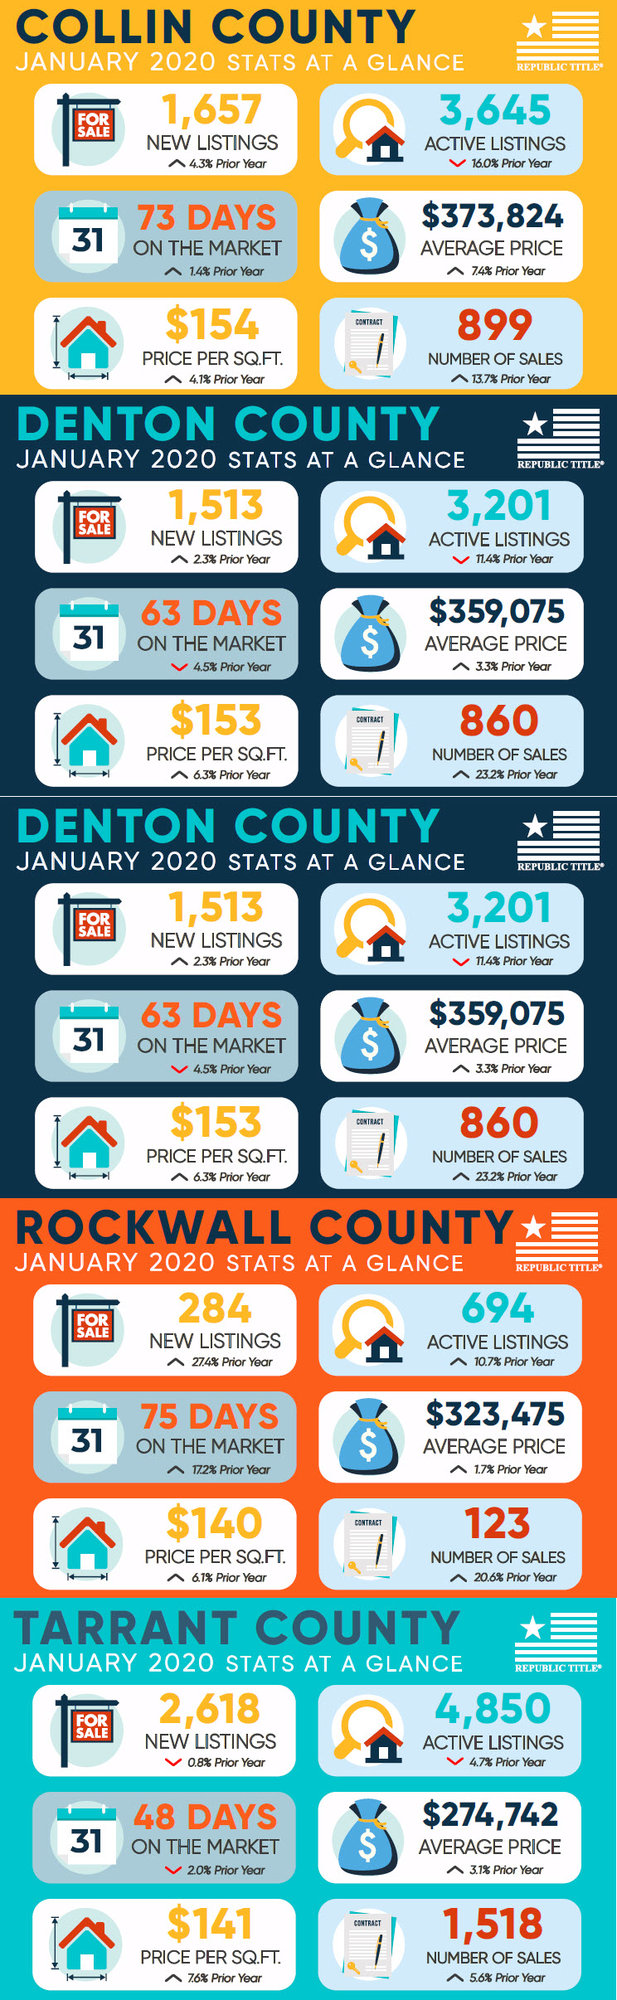 DFW Real Estate Market Statistics - January 2020